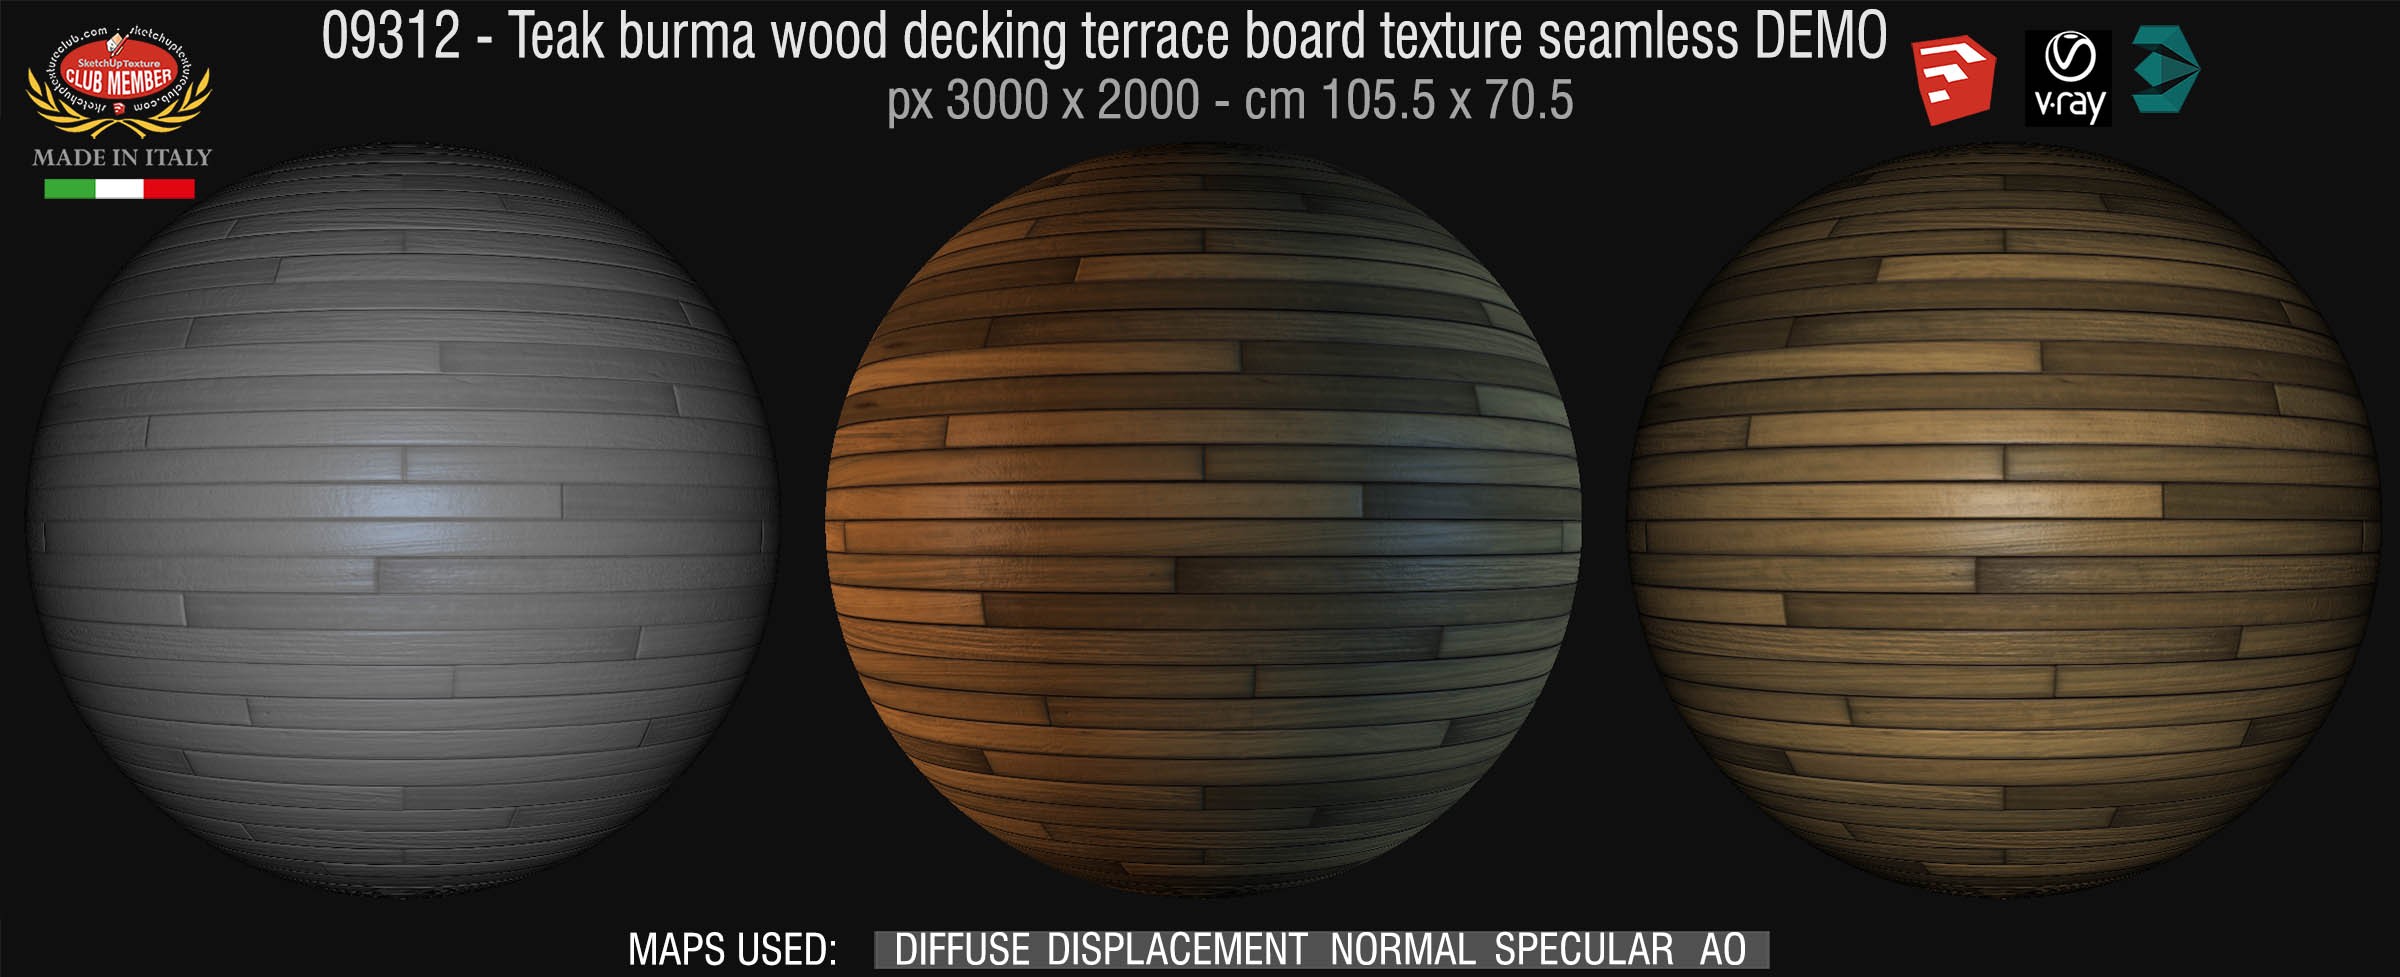 09312 HR Teak burma wood decking terrace board texture seamless + maps DEMO